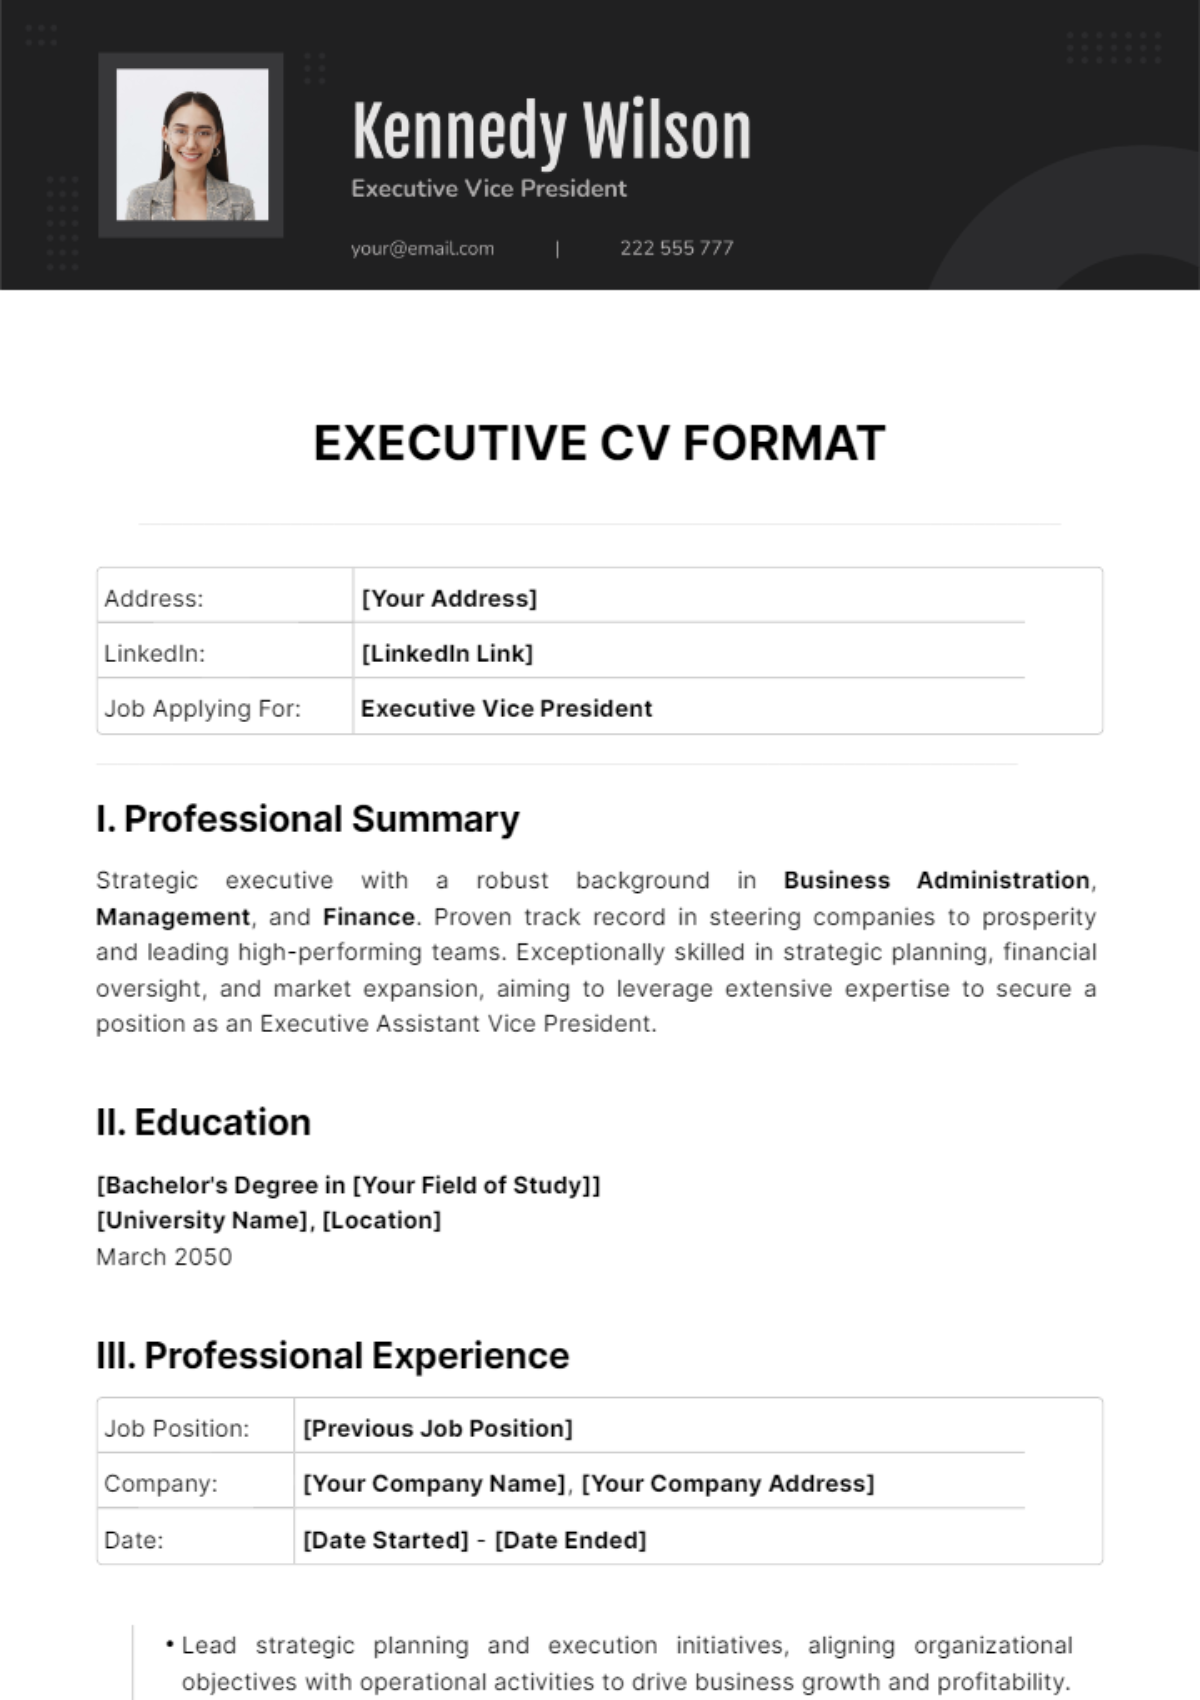 Executive CV Format Template